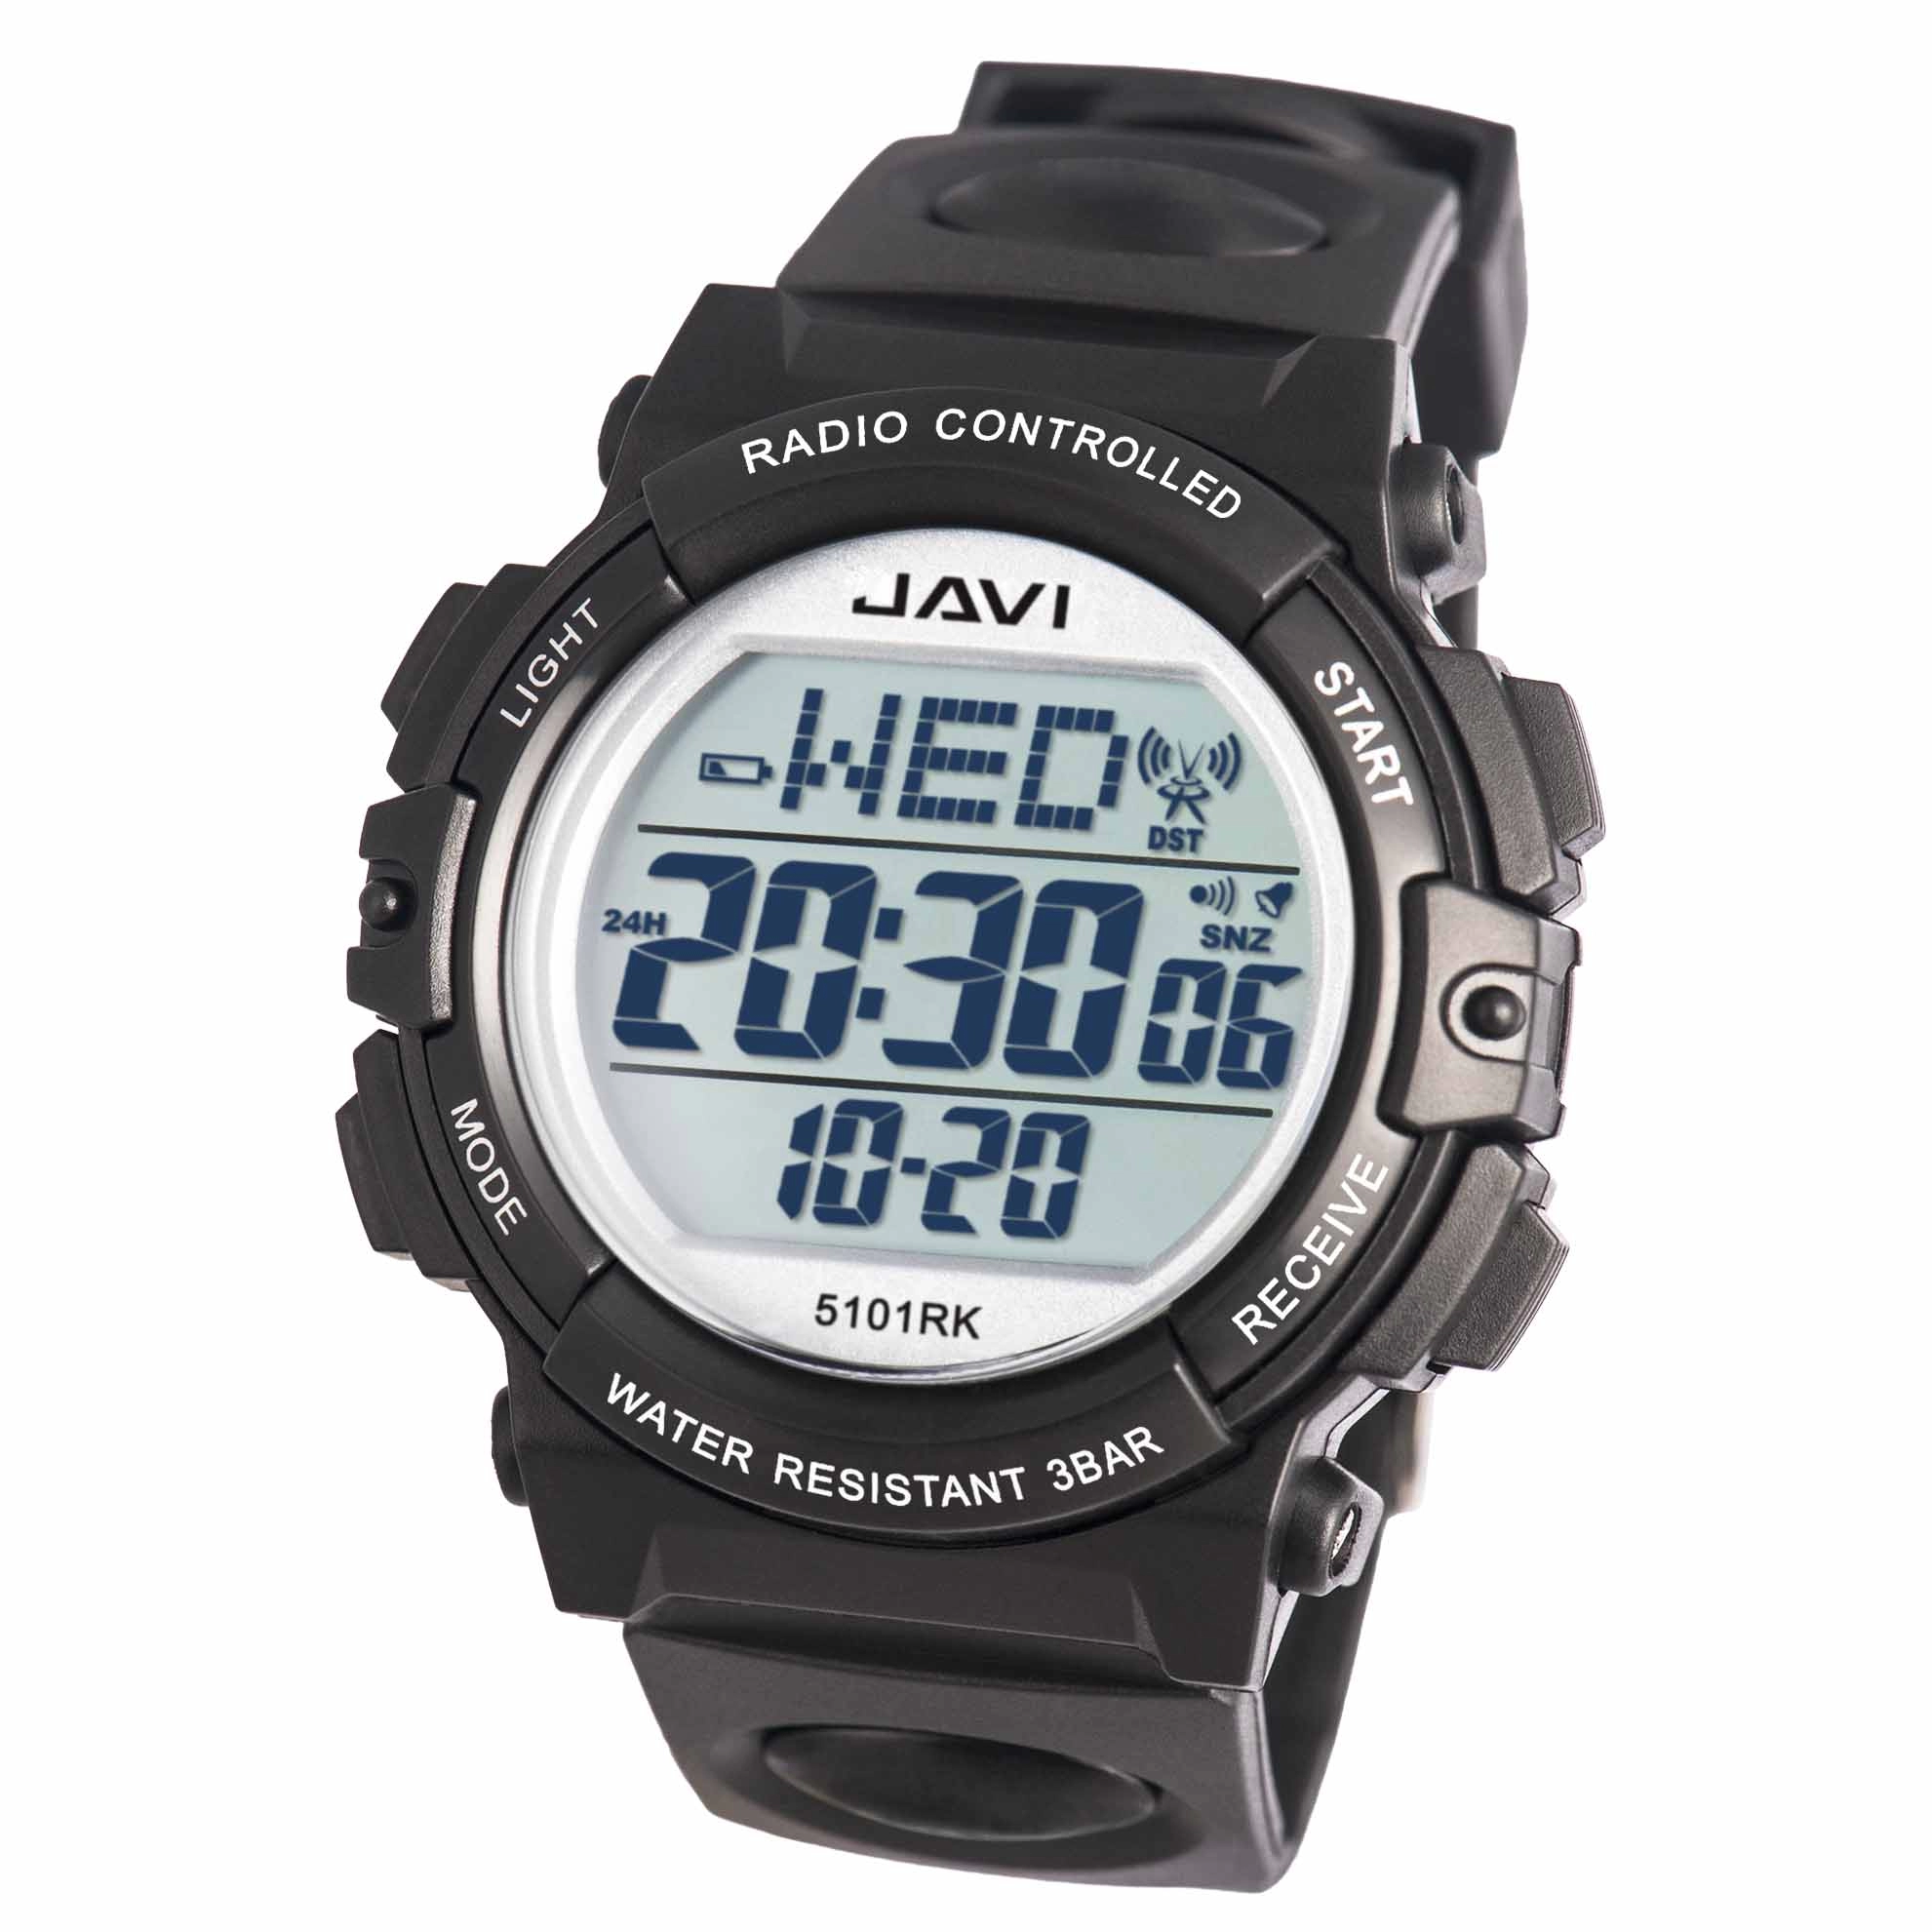 Radio Controlled Multi-function Wrist Watch